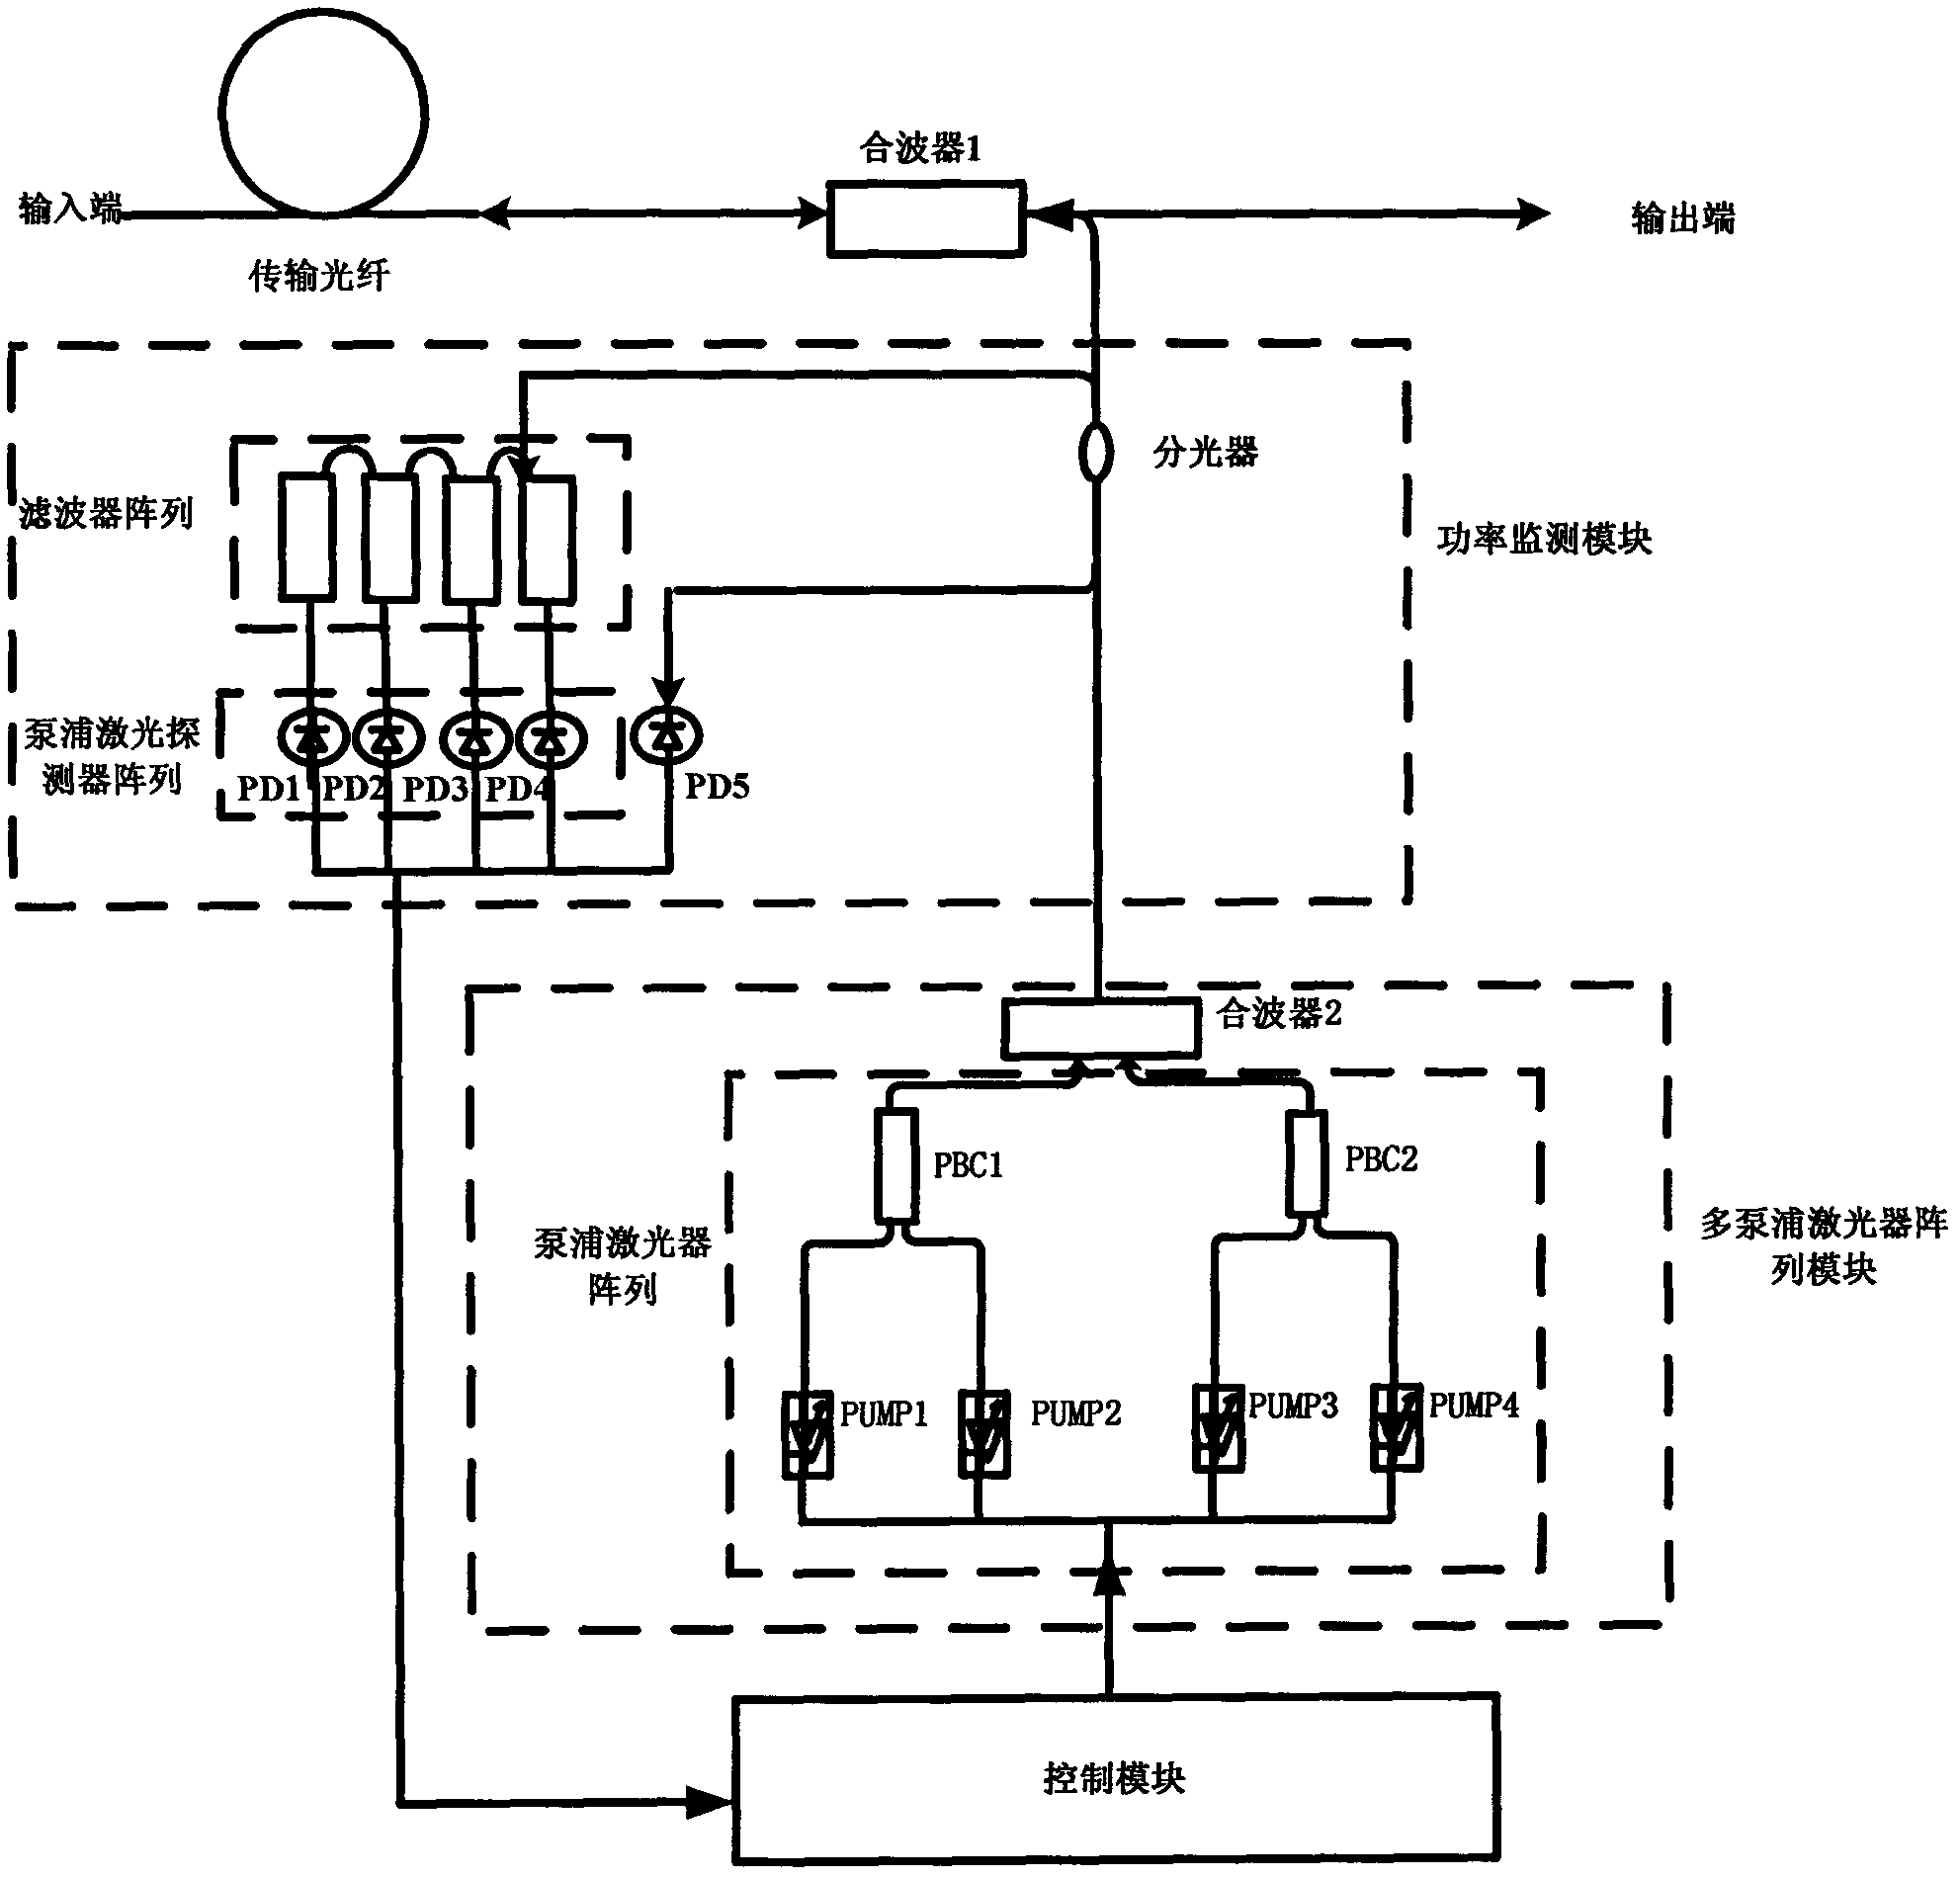 Power control device of multi-pumping raman optical fiber amplifier